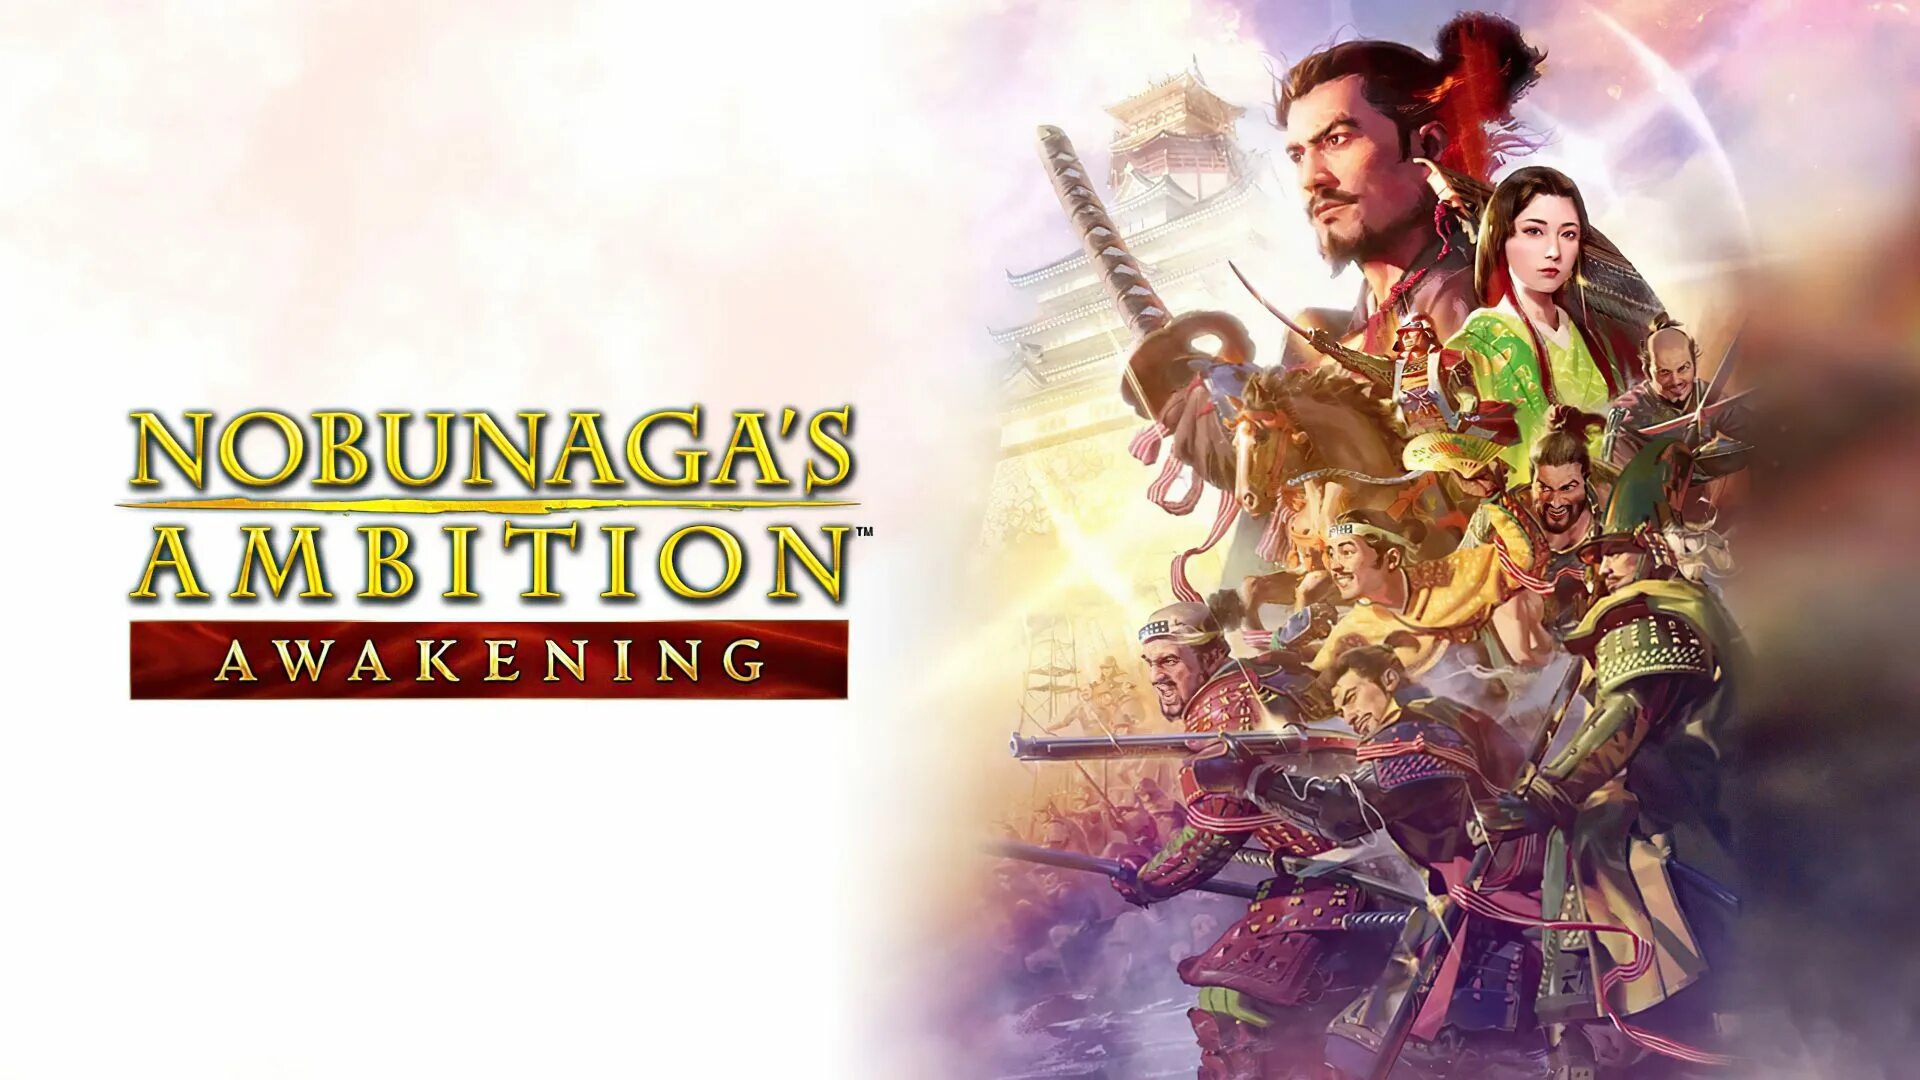 Nobunaga s ambition awakening. Nobunagas Ambition: Awakening. Nobunaga's Ambition: Revolution.